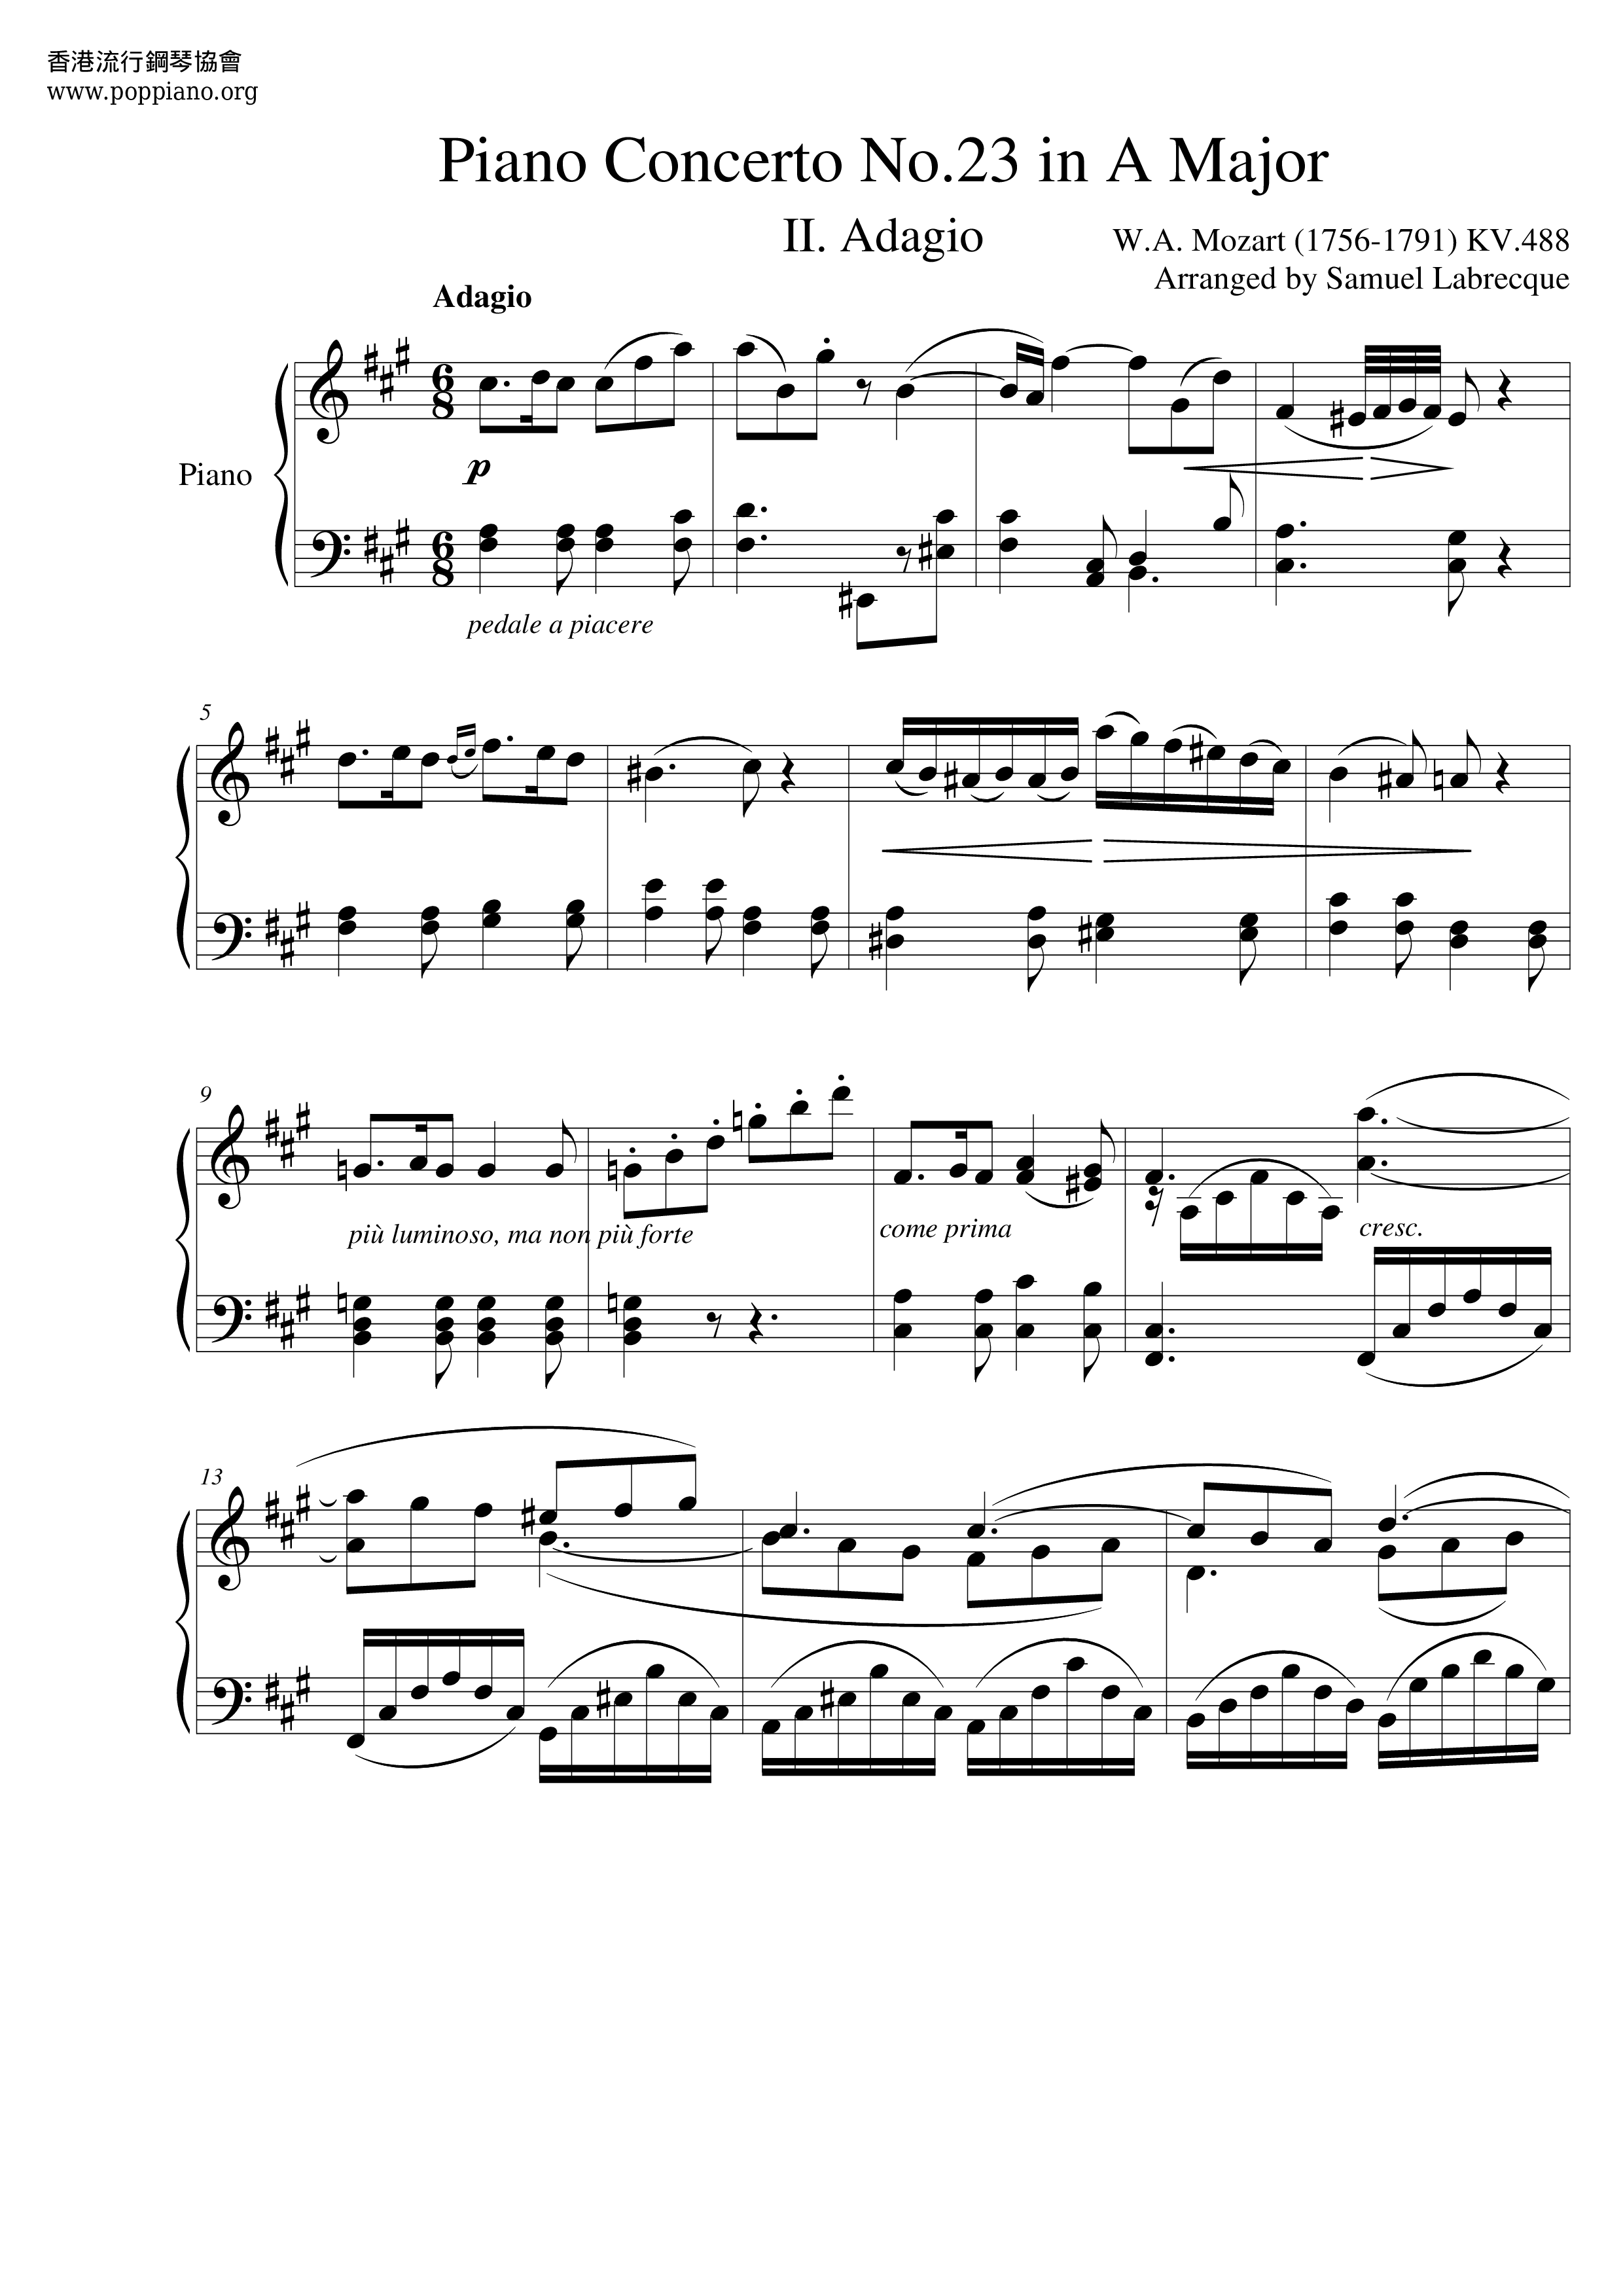 Piano Concerto No.23 in A, K. 488ピアノ譜